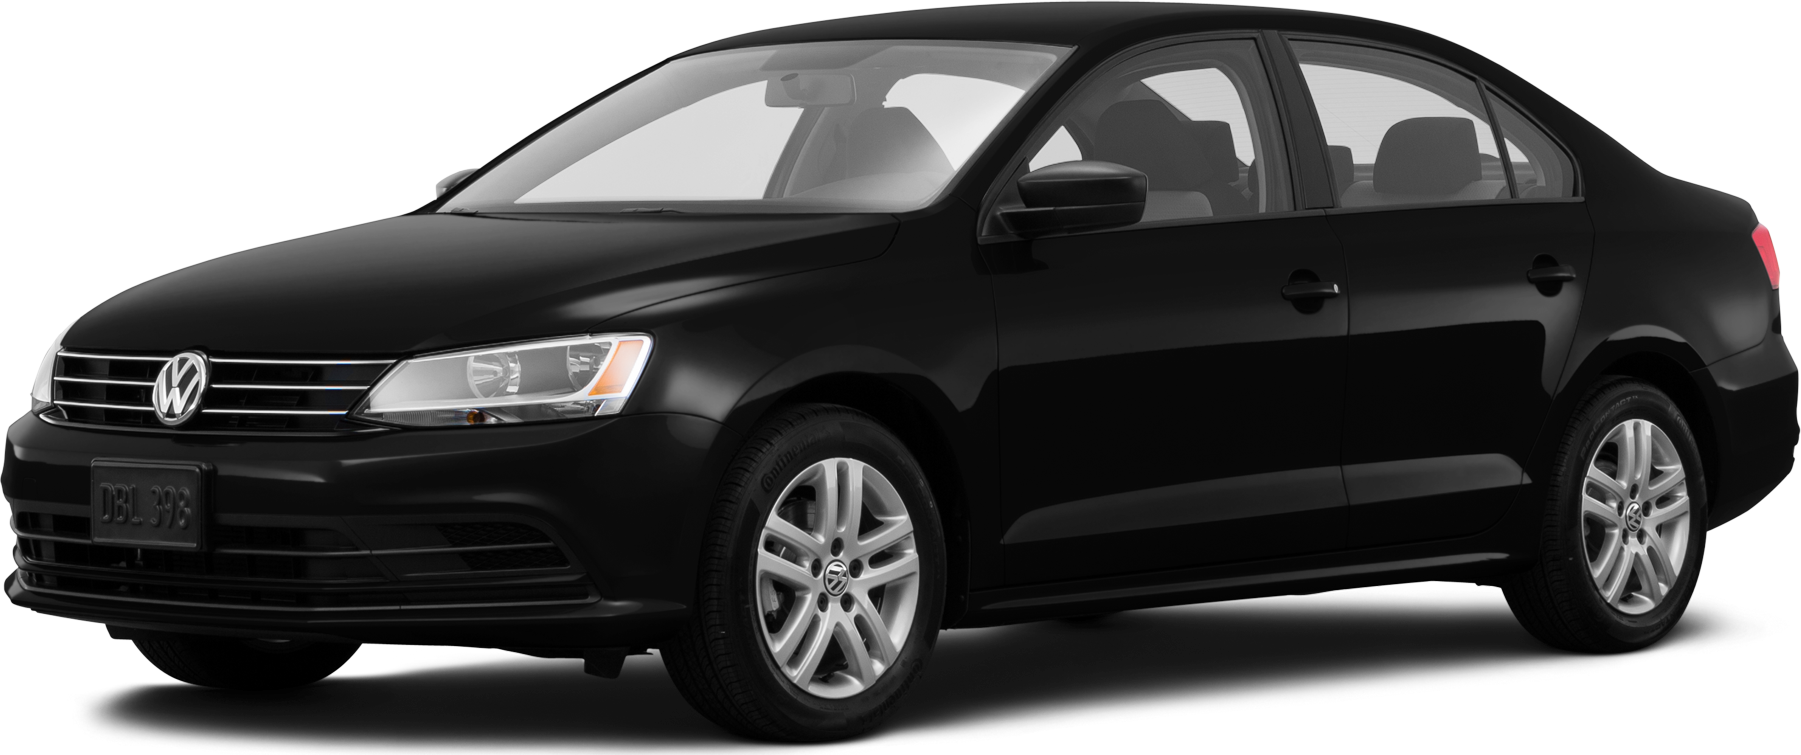 2015 Volkswagen Jetta Price, Value, Ratings & Reviews